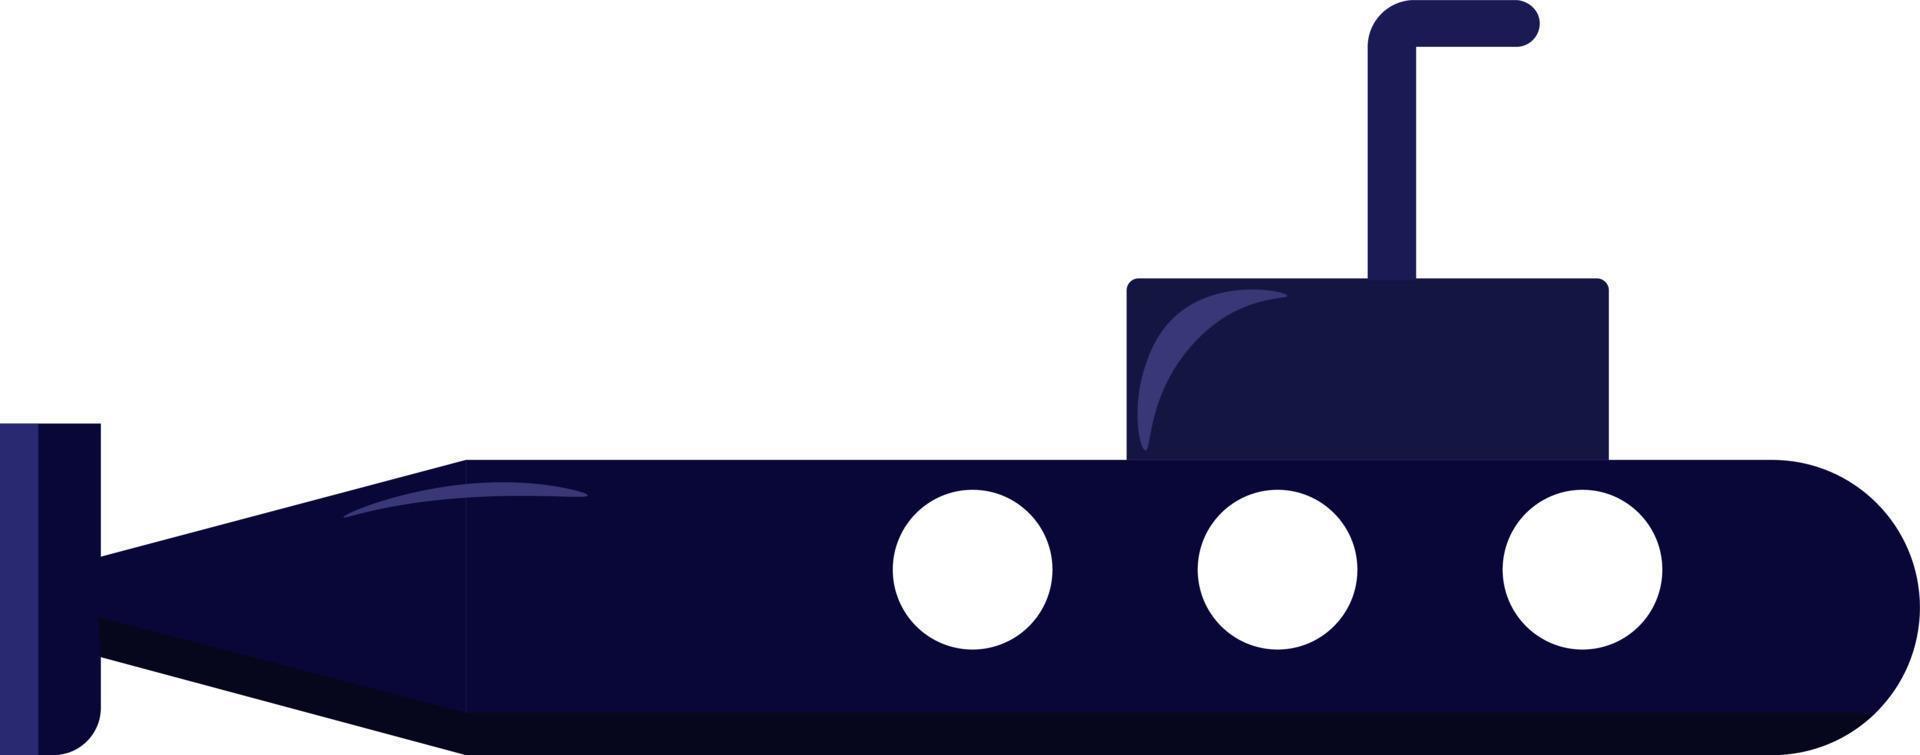 Blue submarine, illustration, vector on white background.